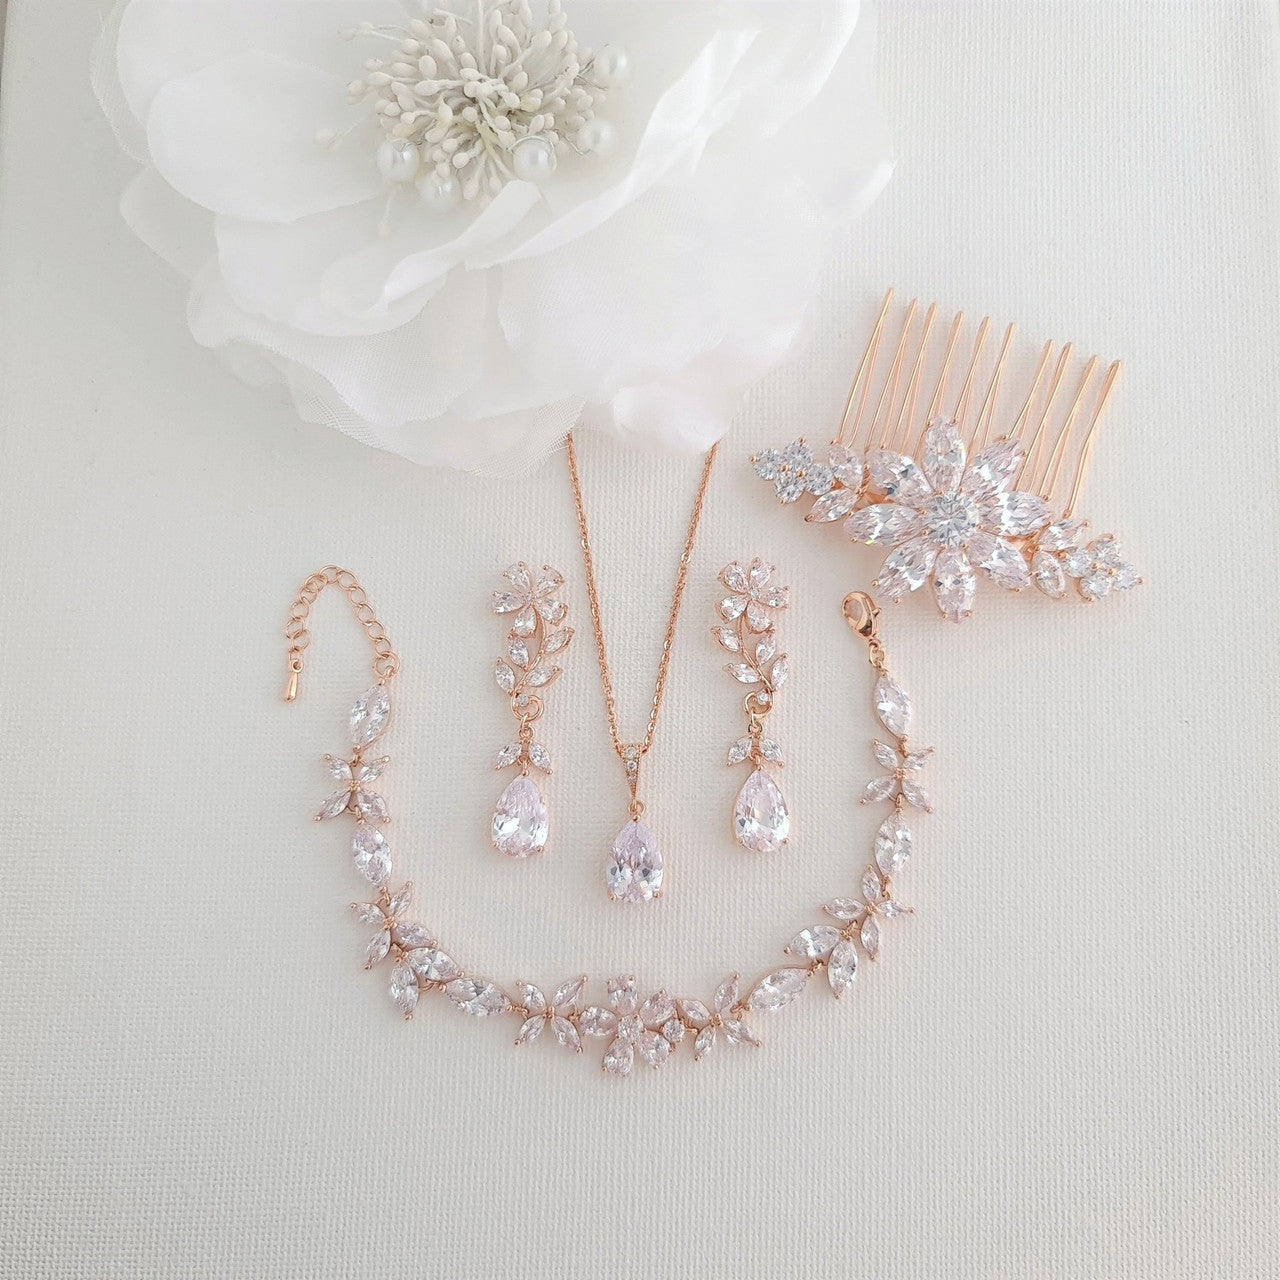 Floral Bridal Bracelet in Rose Gold & CZ Crystals- Daisy